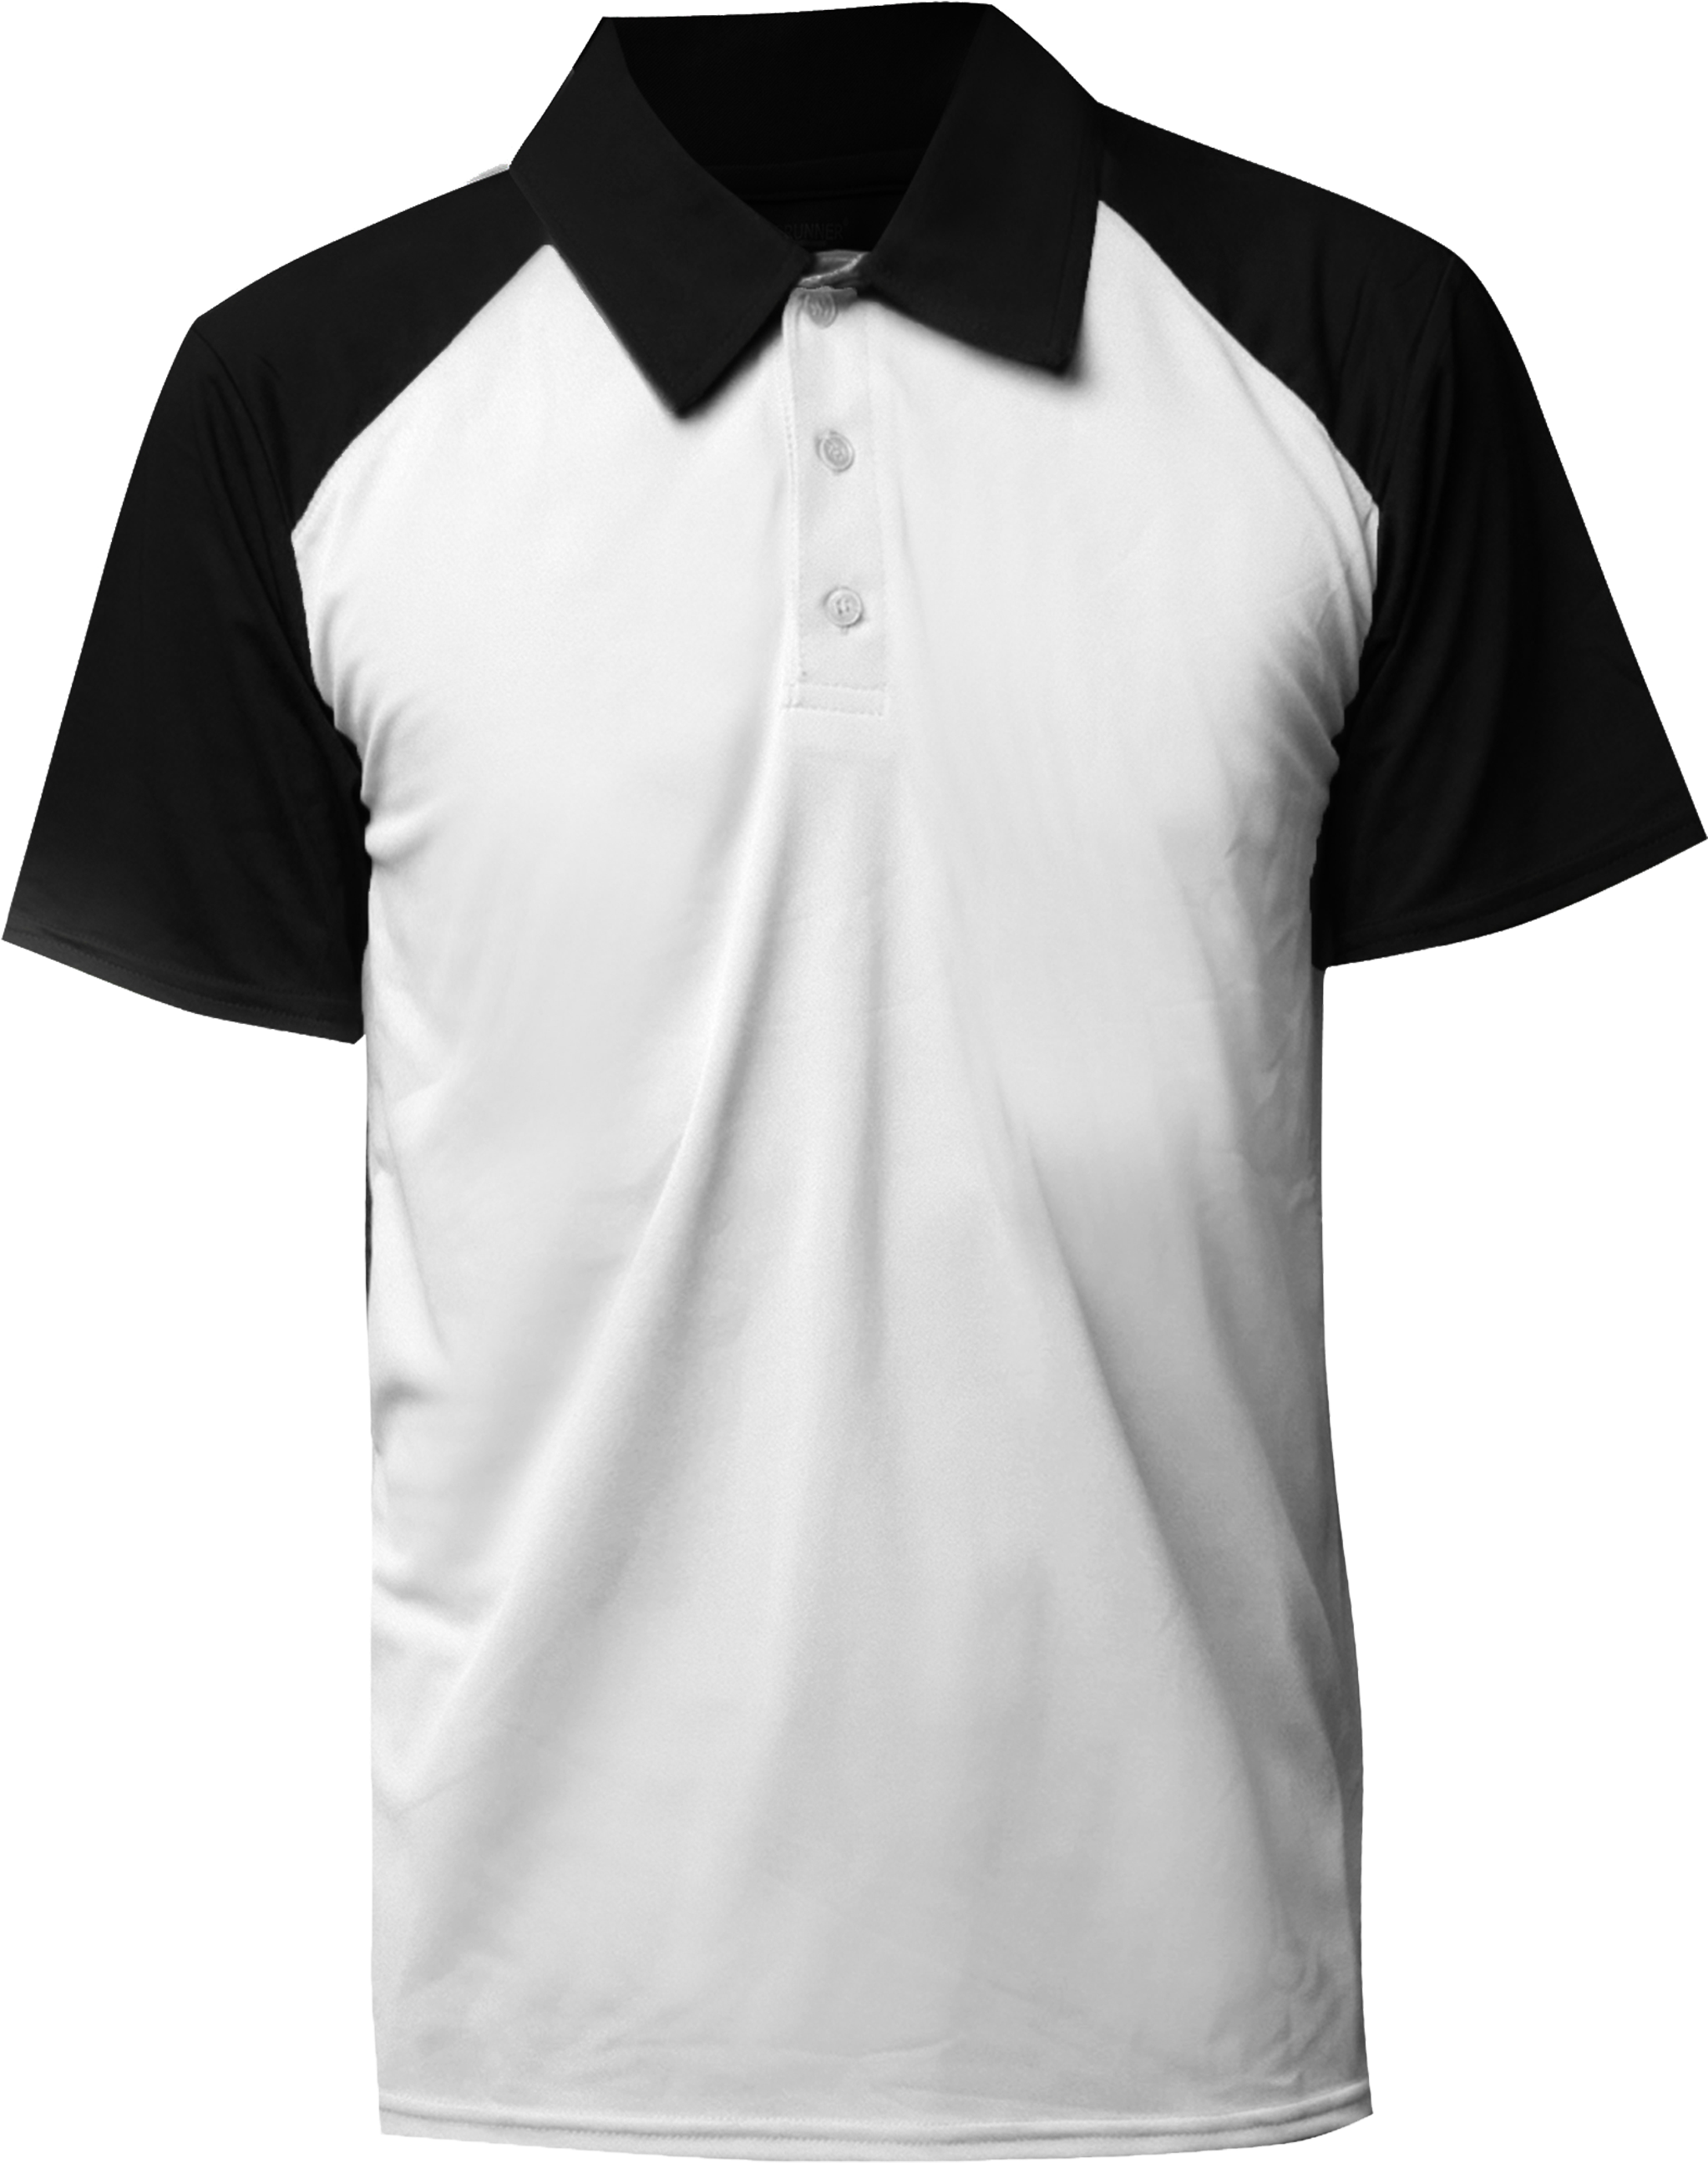 Polo Shirt Png 2045 X 2590